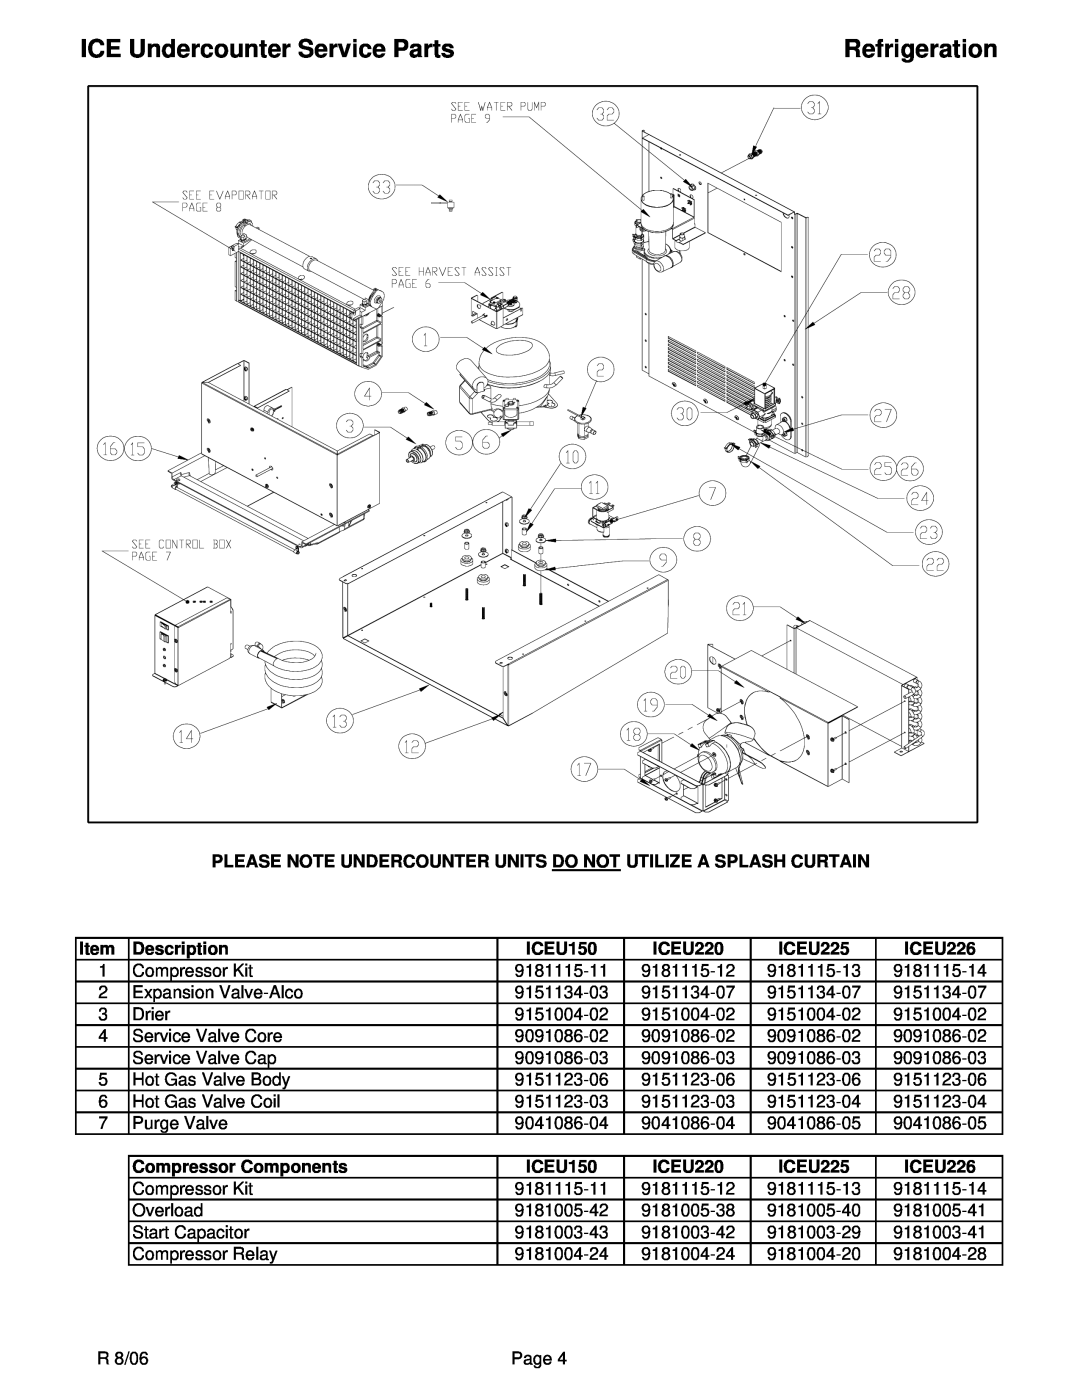 Ice-O-Matic ICEU226, ICEU225, ICEU150, ICEU220 manual Refrigeration, ICE Undercounter Service Parts 